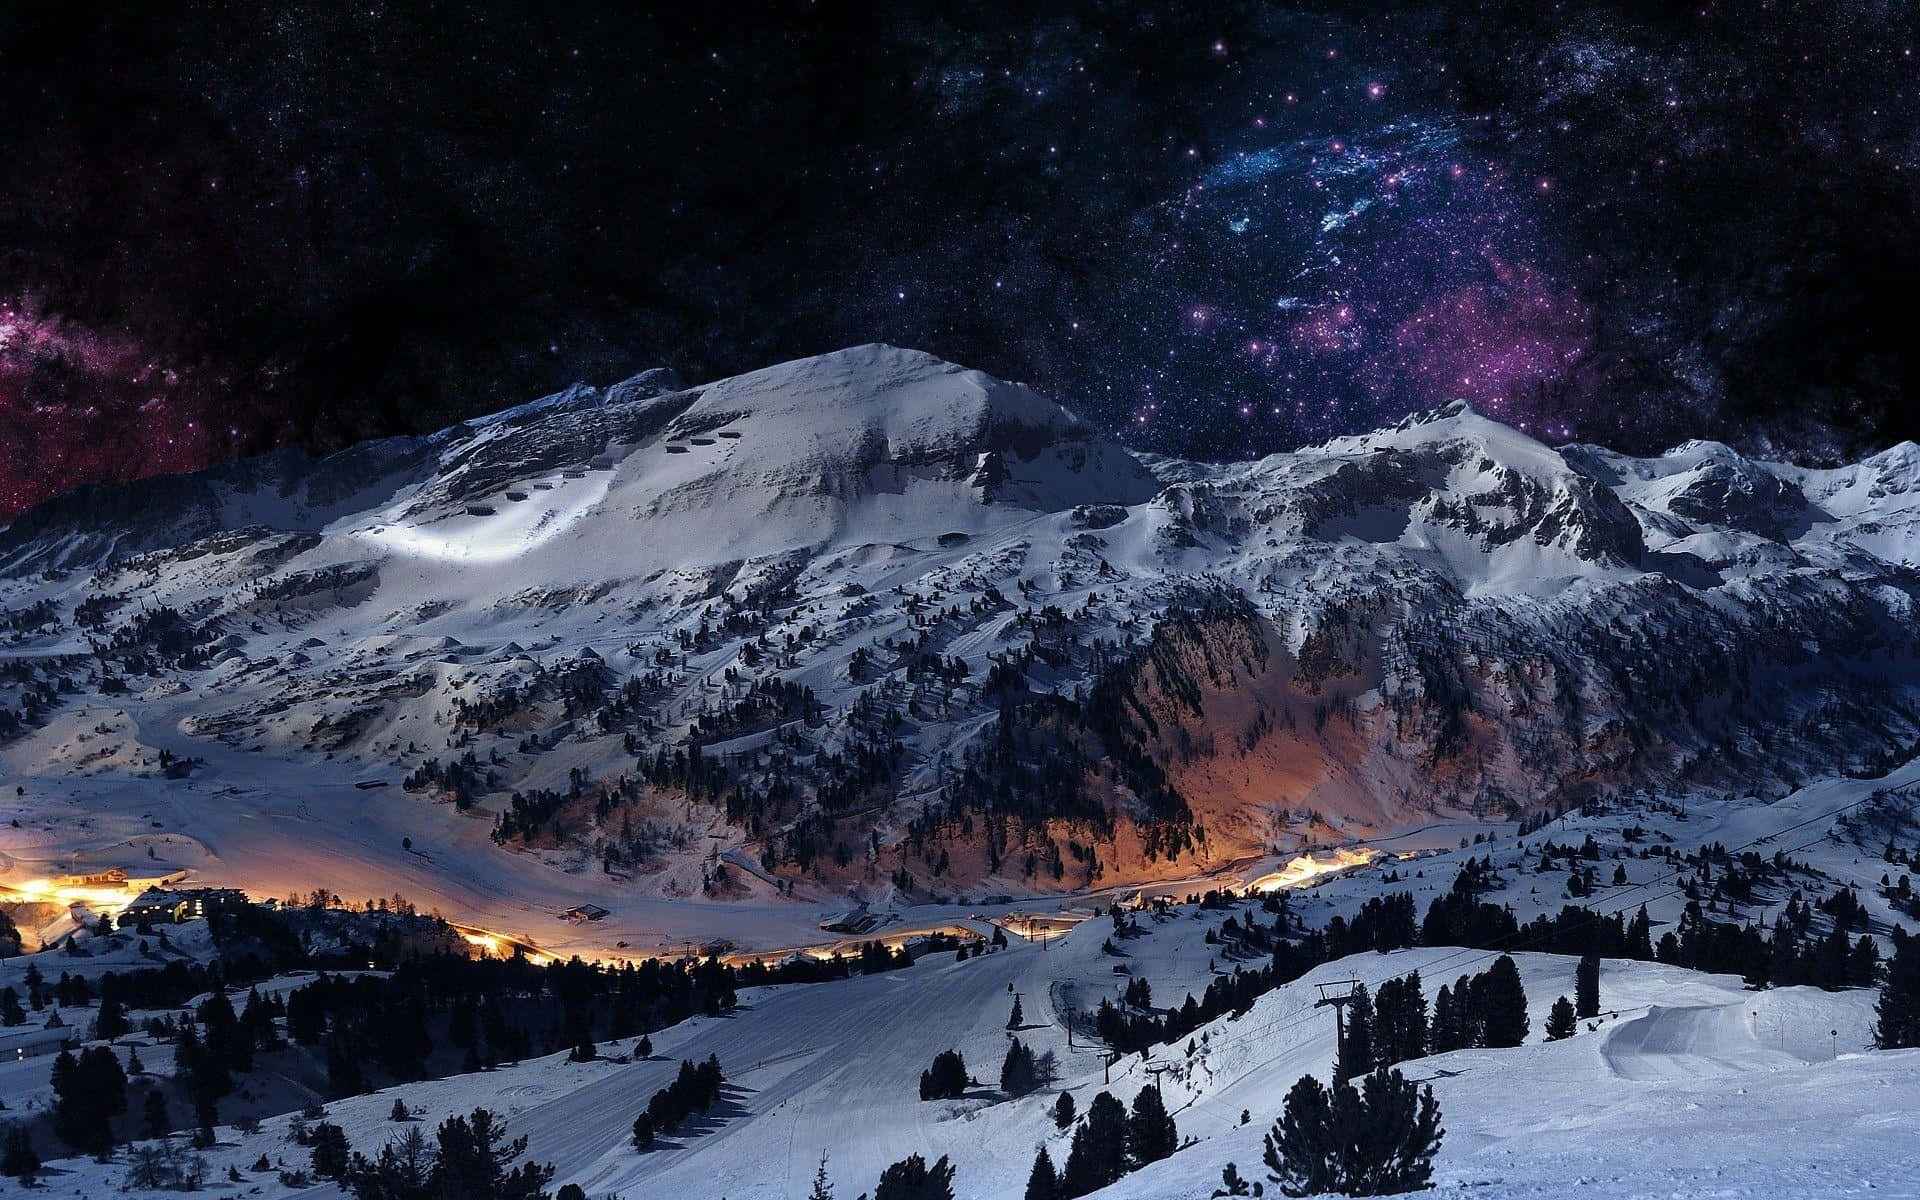 "Soak in the Splendor of a Winter Night" Wallpaper